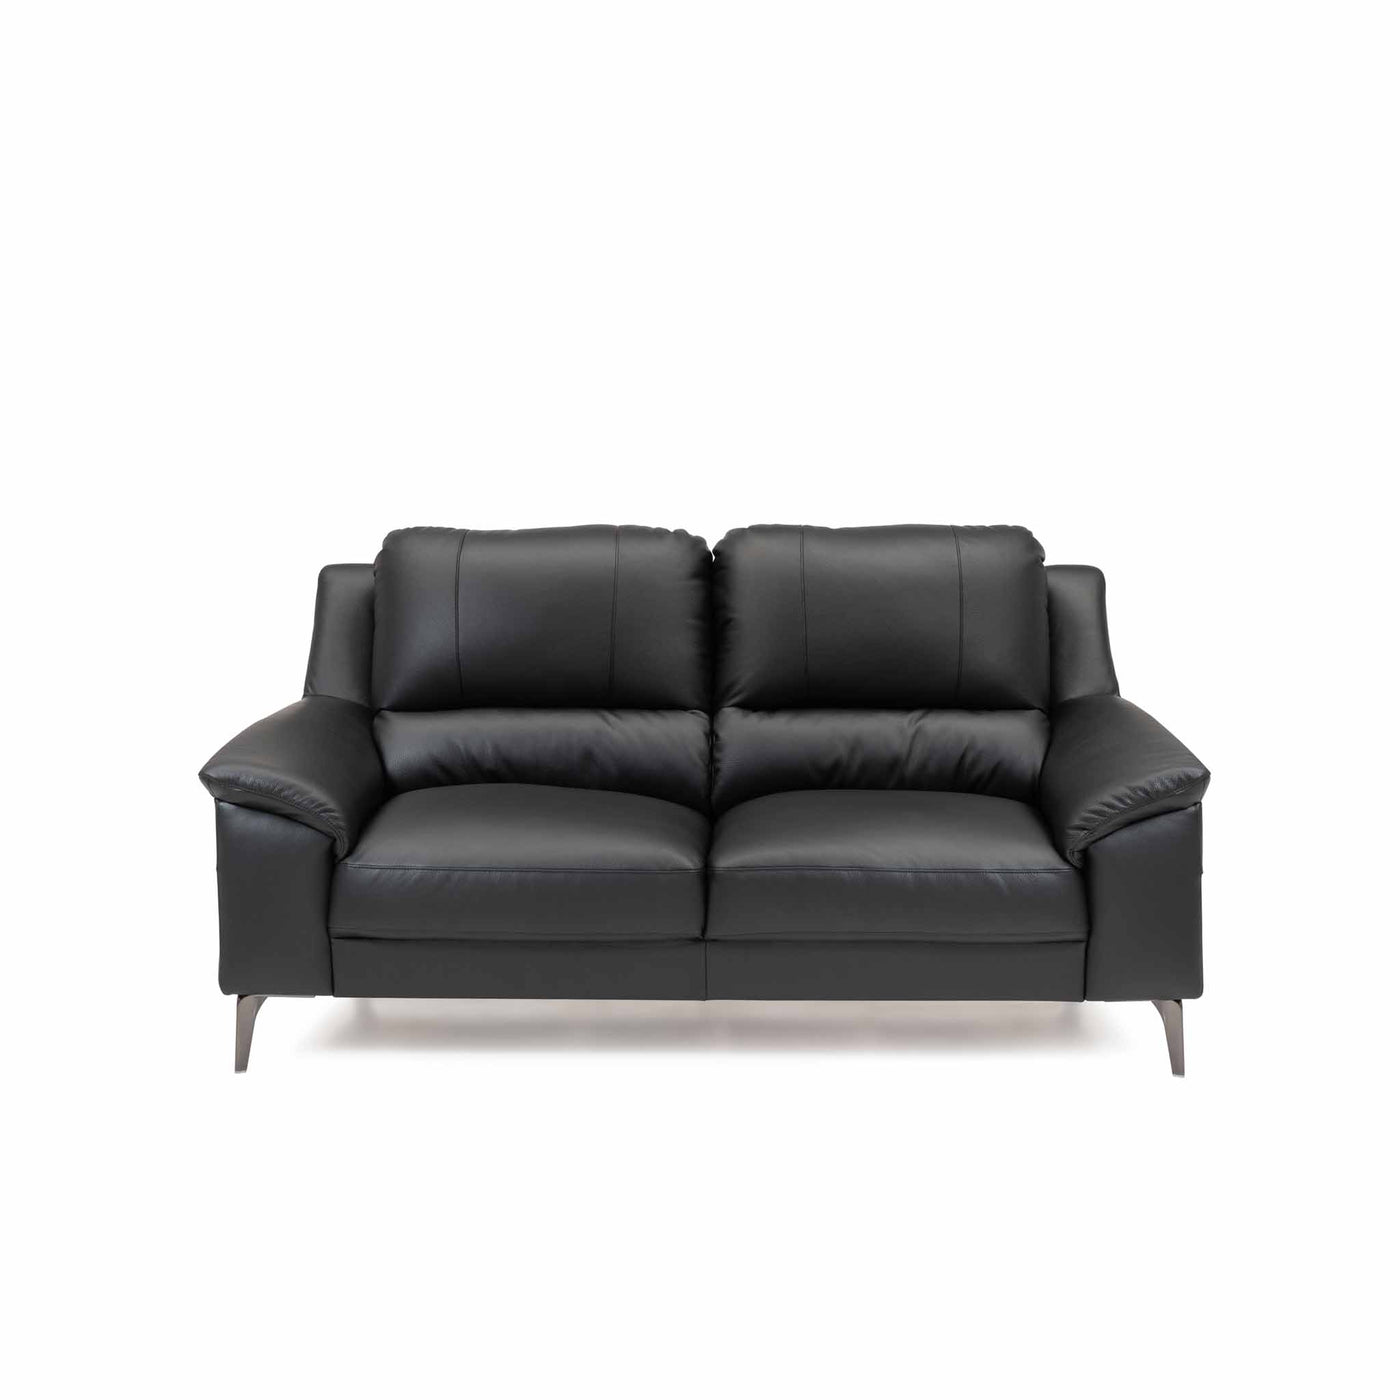 Agersø 2 pers. sofa i sort læder fra Hjort Knudsen